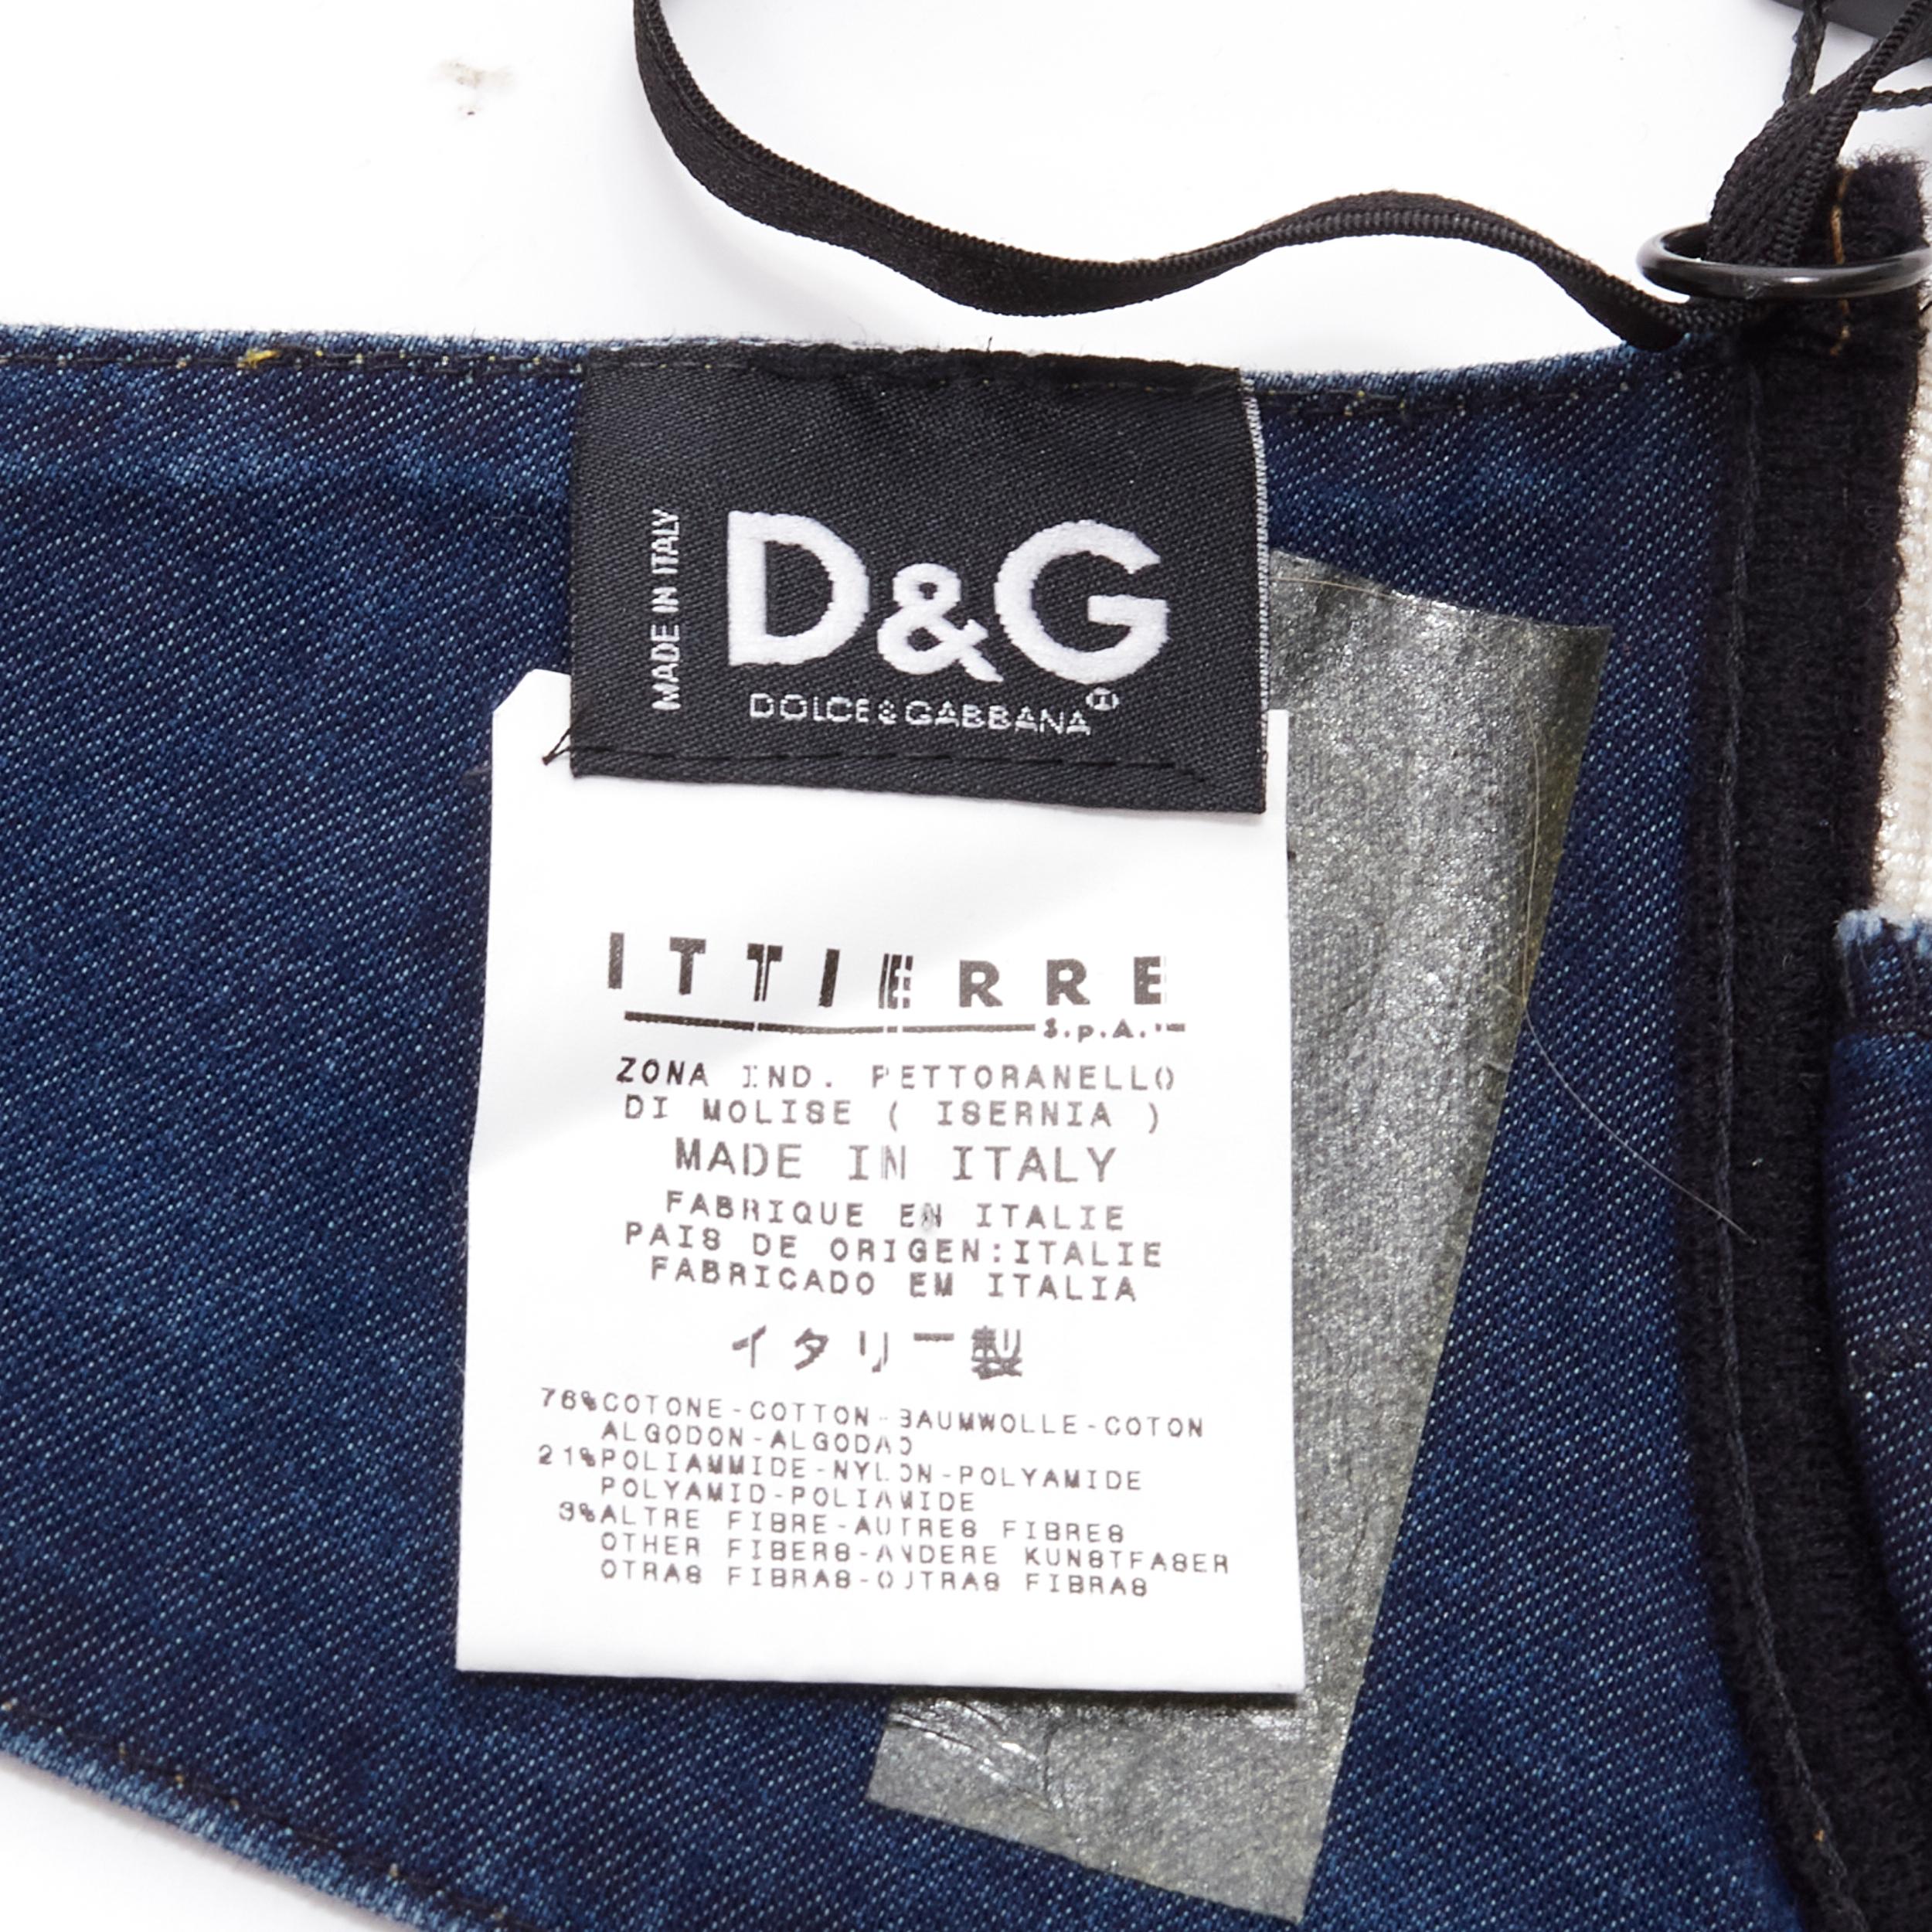 D&G DOLCE GABBANA 2001 Vintage white lace trim denim padded bra S For Sale 4